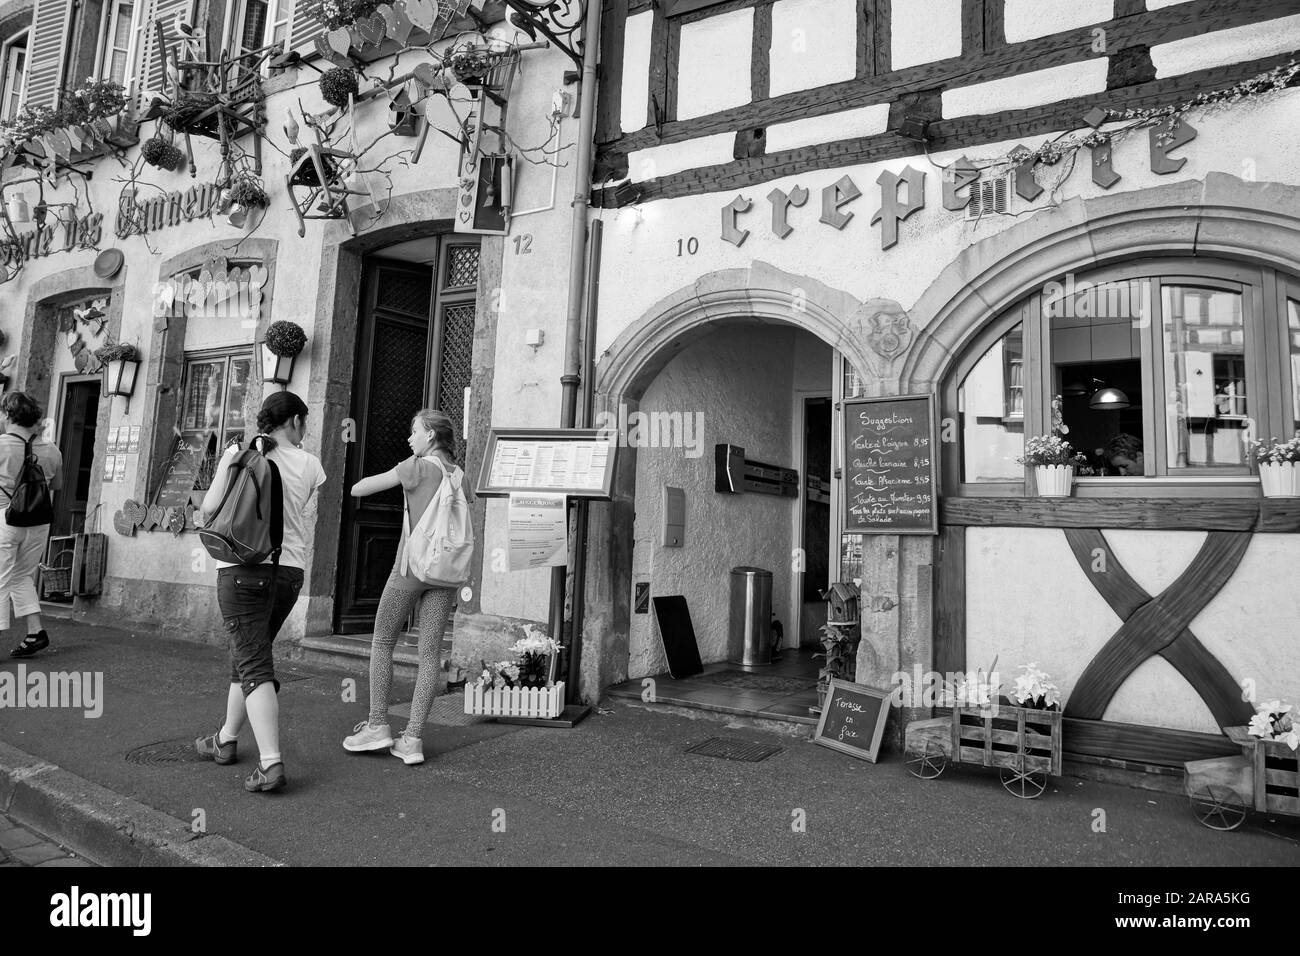 Creperie restaurant, Old building, Colmar, Haut Rhin, Grand Est, France, Europe Stock Photo